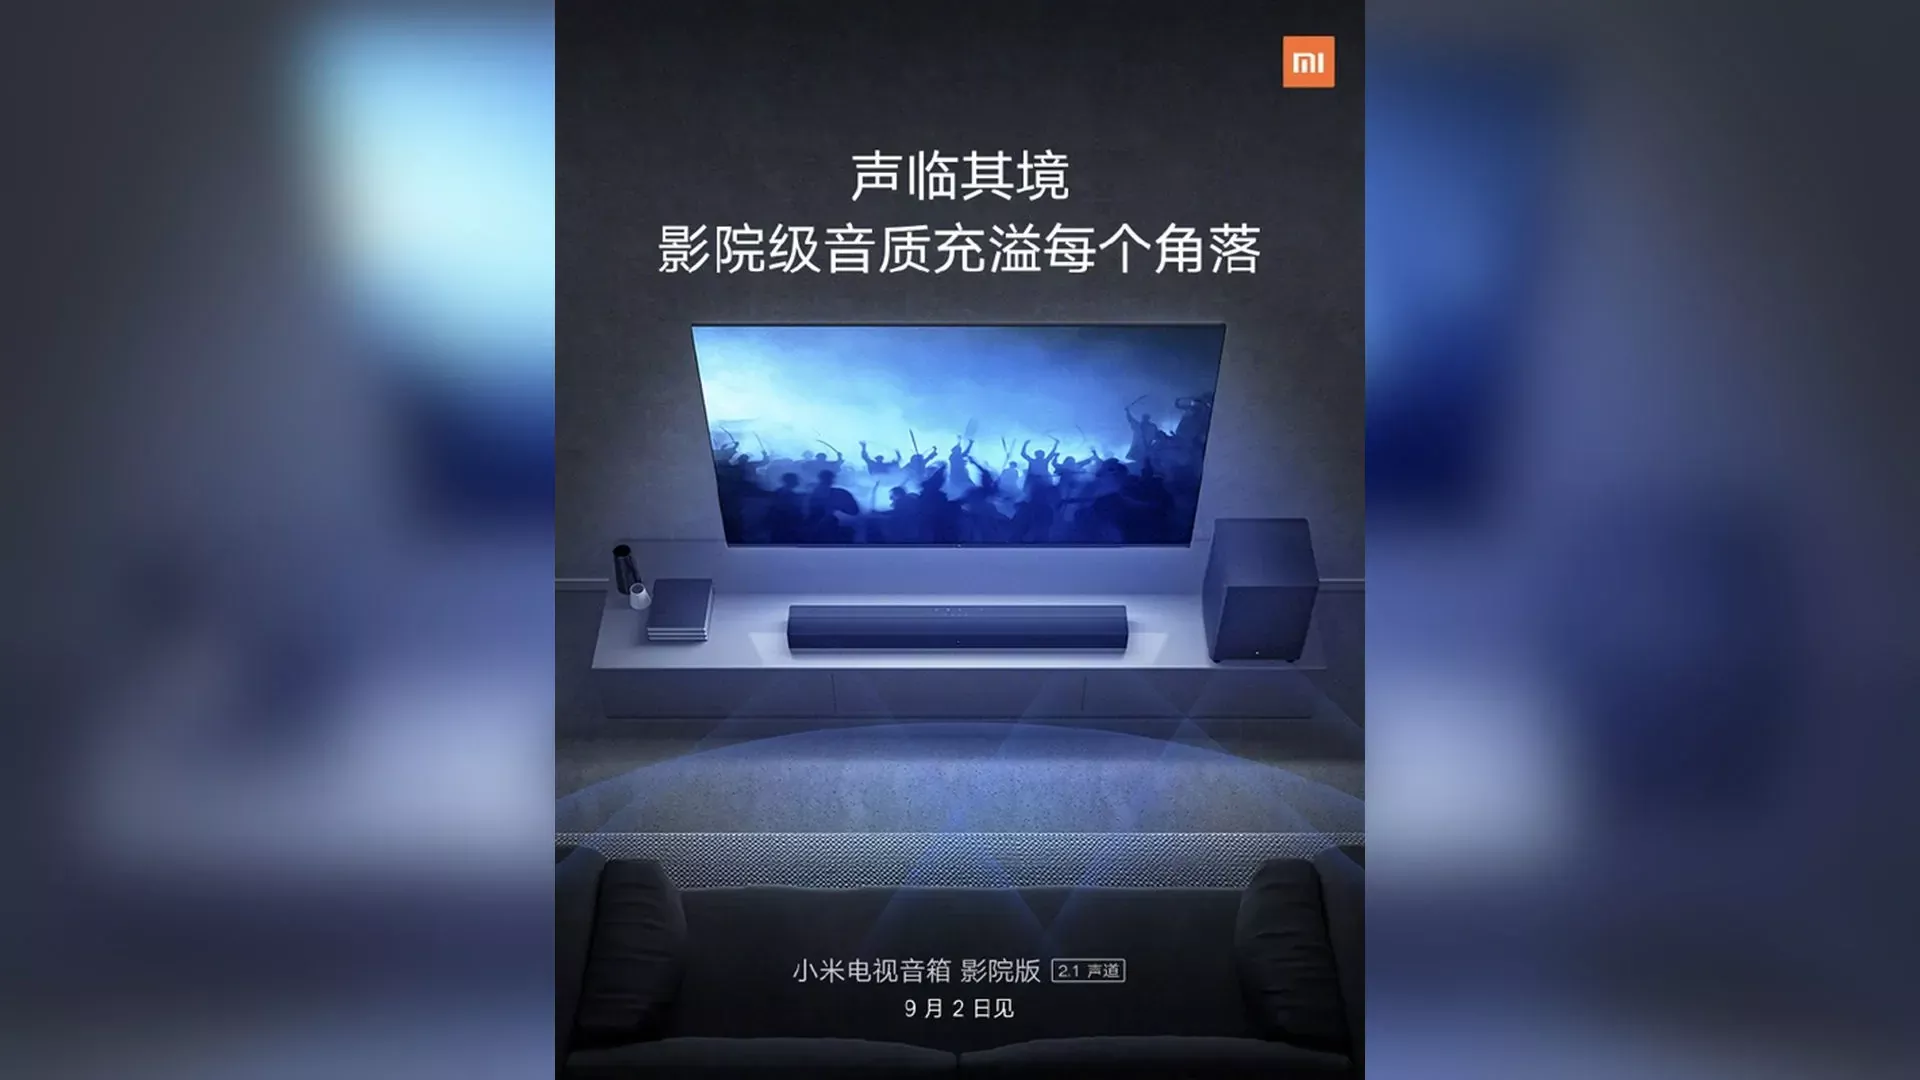 Xiaomi cinema edition ver 2.0 2.1. Сабвуфер для телевизора Xiaomi. Xiaomi mi TV Speaker Cinema 5.1. Xiaomi mi TV тихий звук. Саундбар Xiaomi Cinema Edition ver. 2.0 2.1 34вт+66вт.